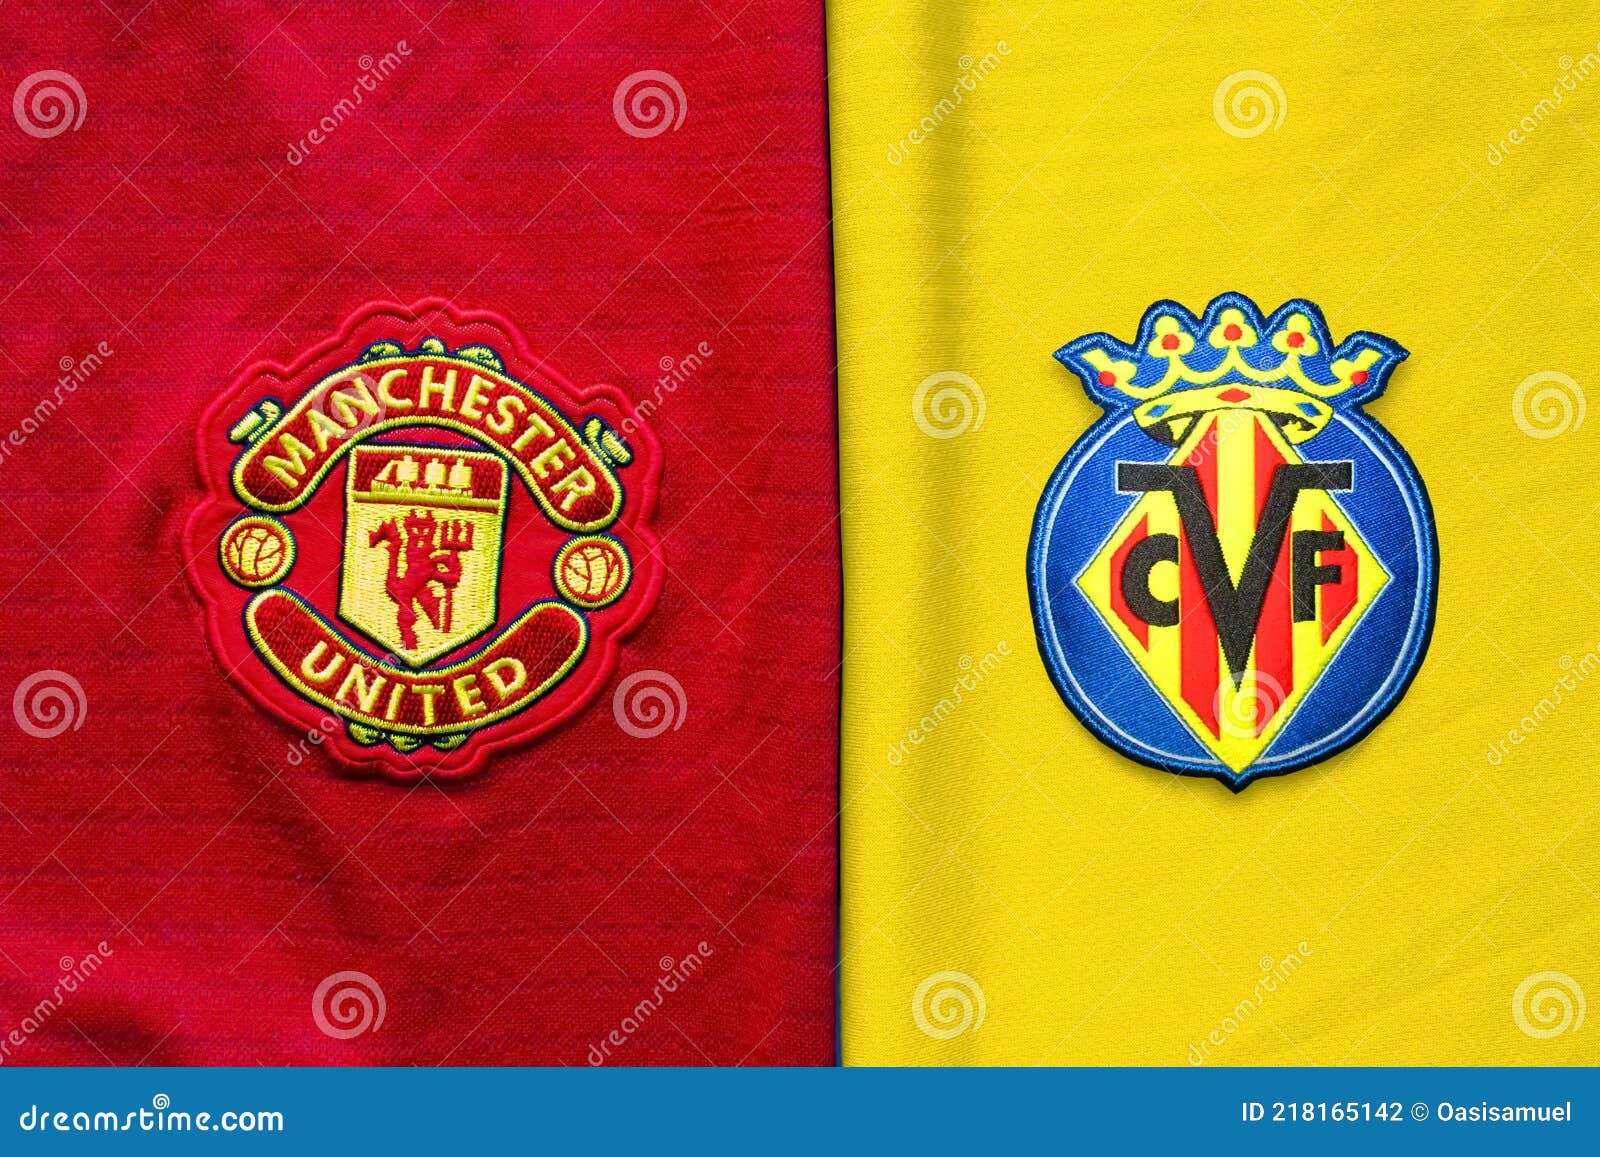 Villarreal mu final vs Manchester United